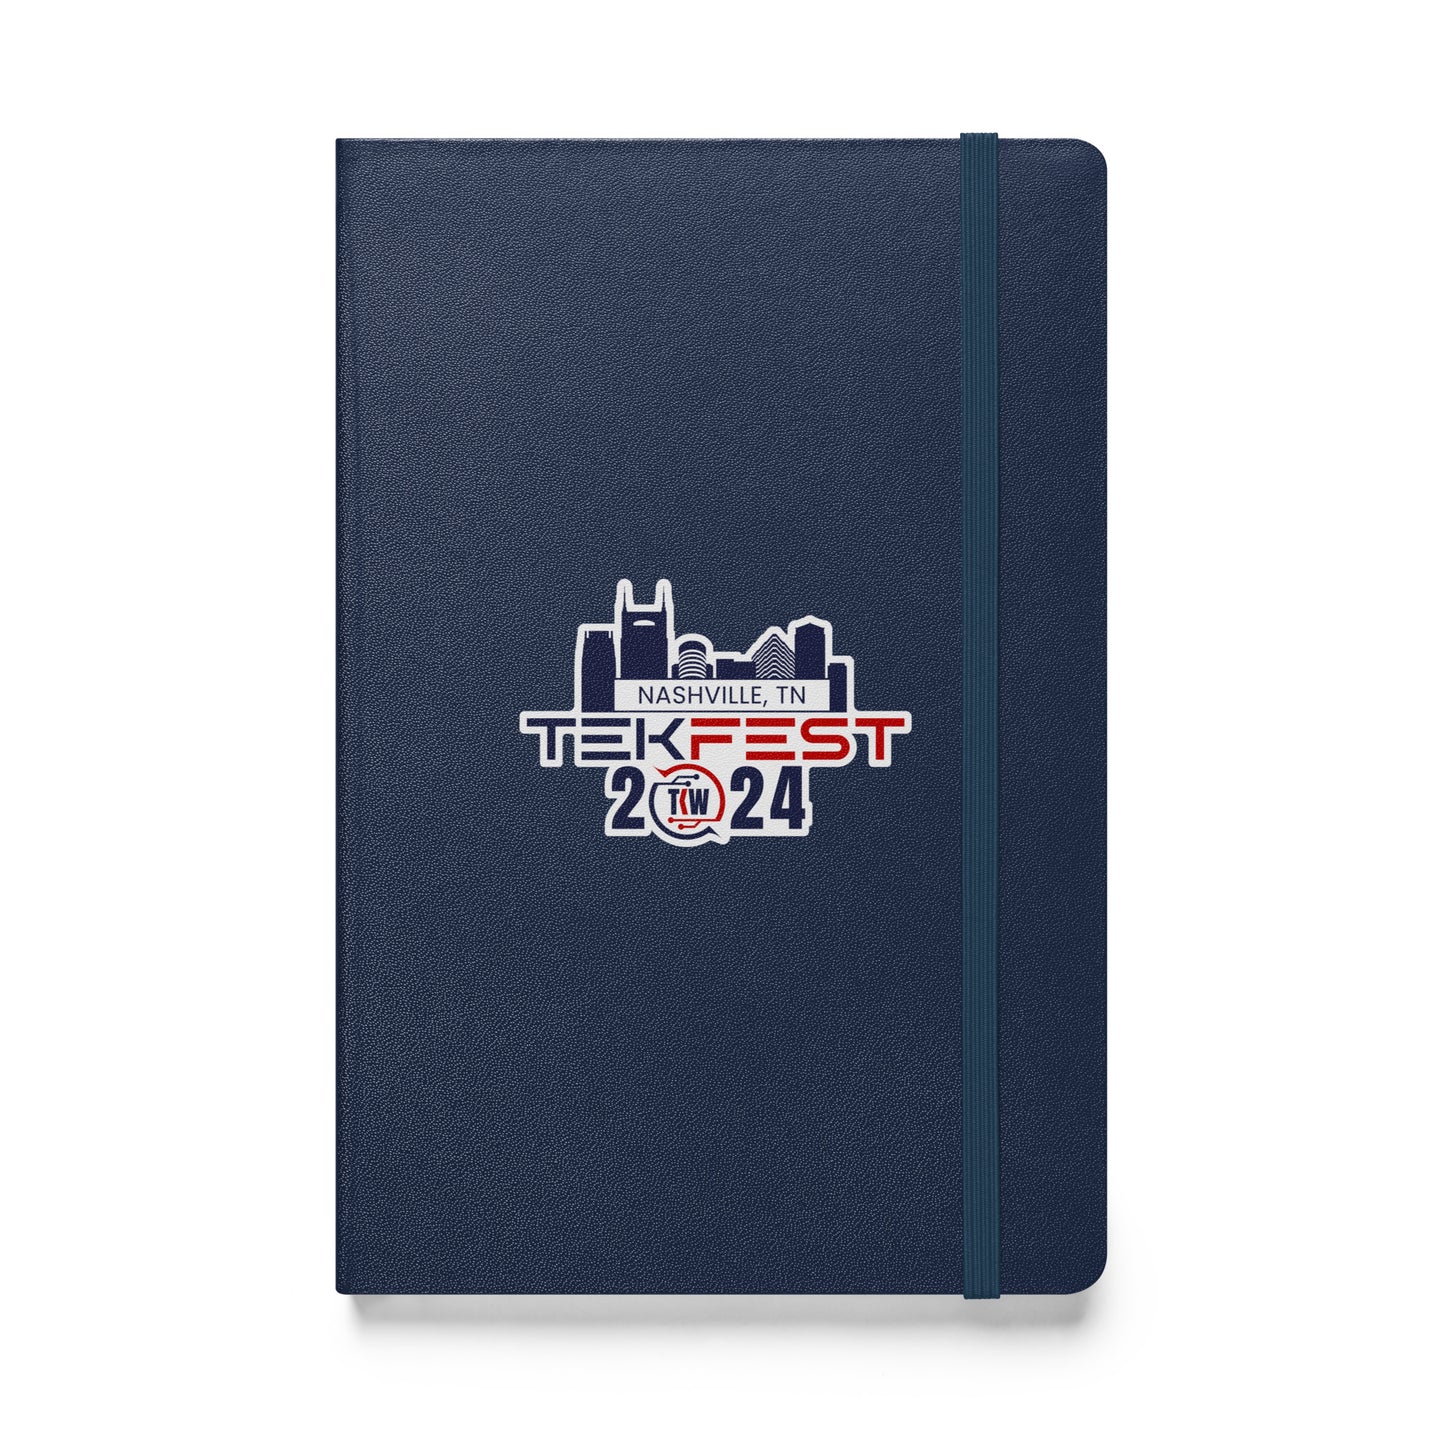 TEKFest Hardcover bound notebook